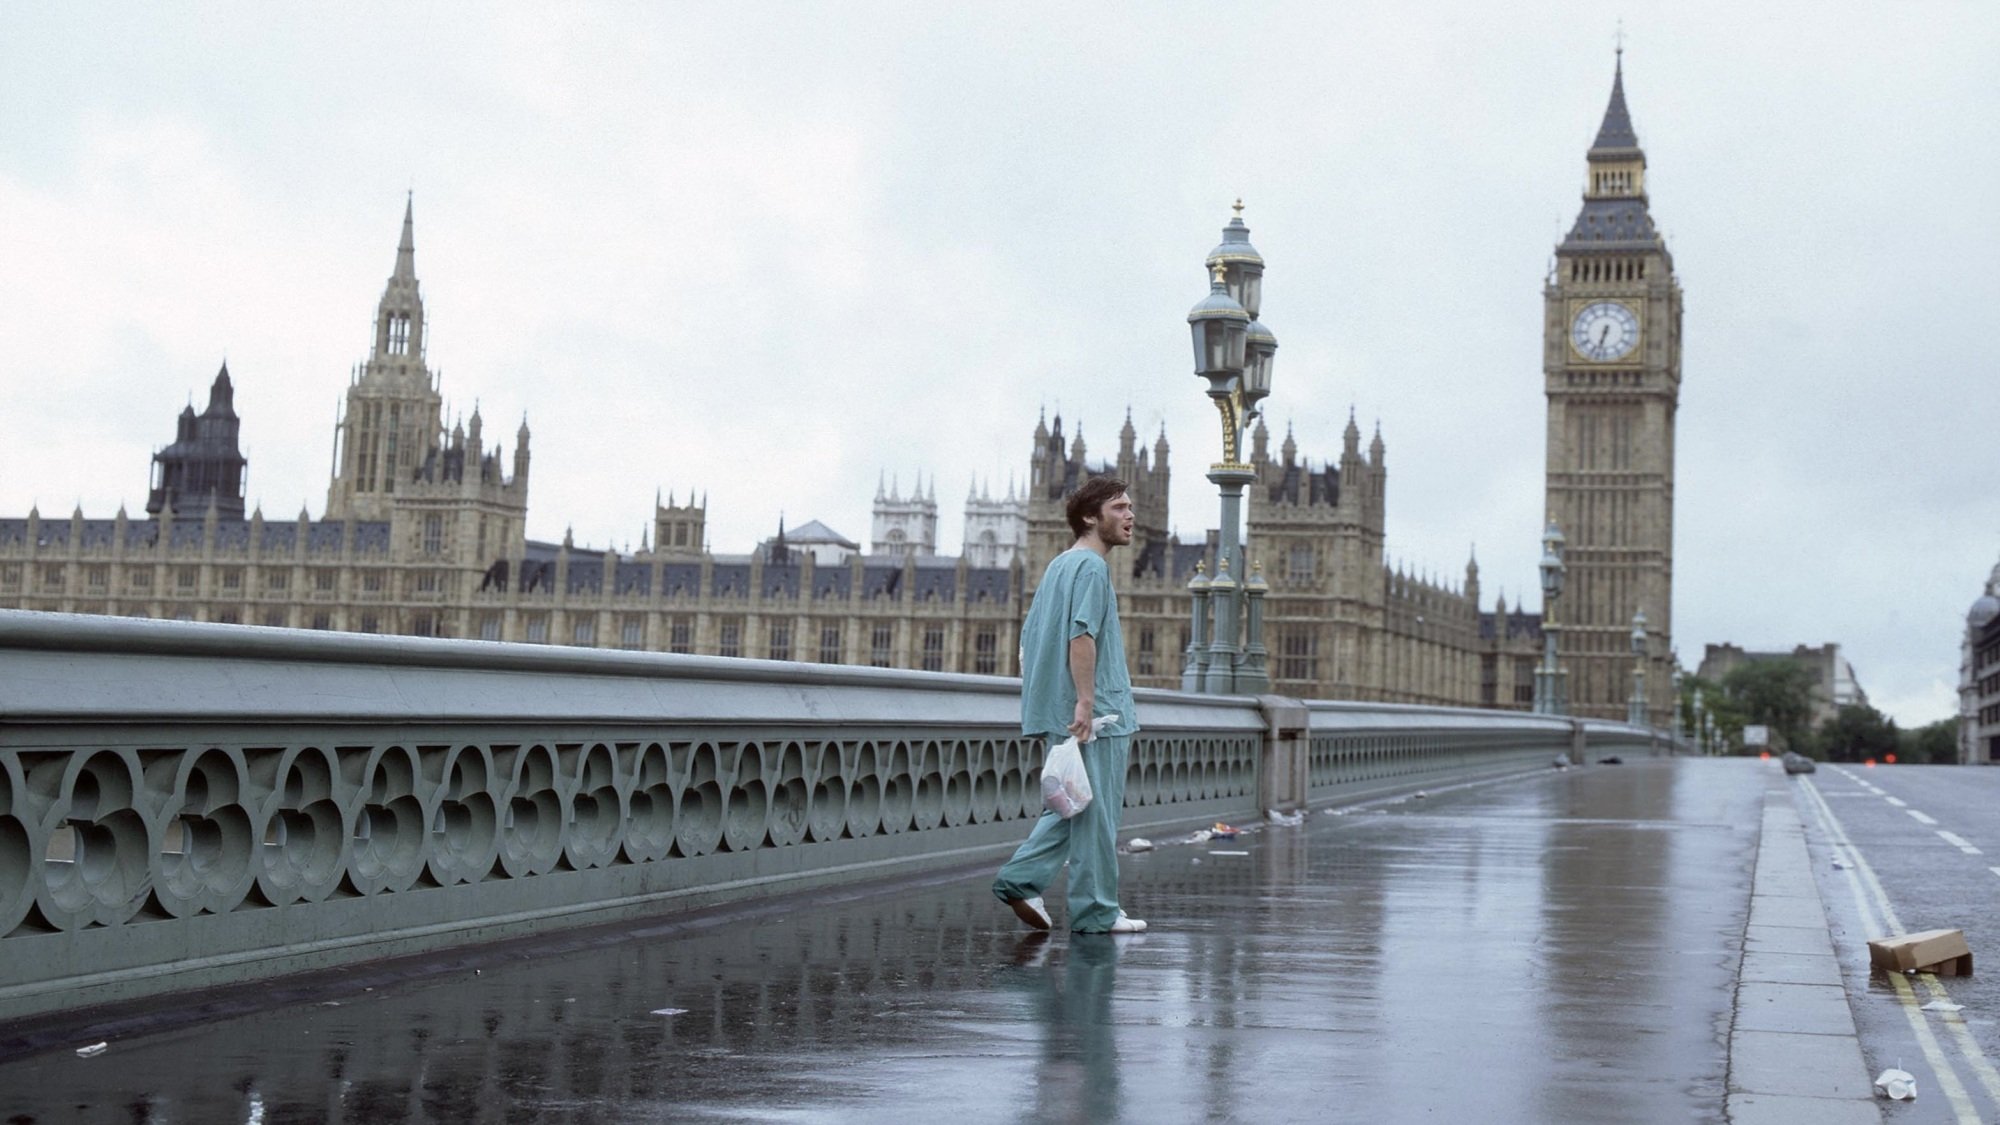 A man in hospital scrubs walks across a deserted Westminster Bridge towards Big Ben.